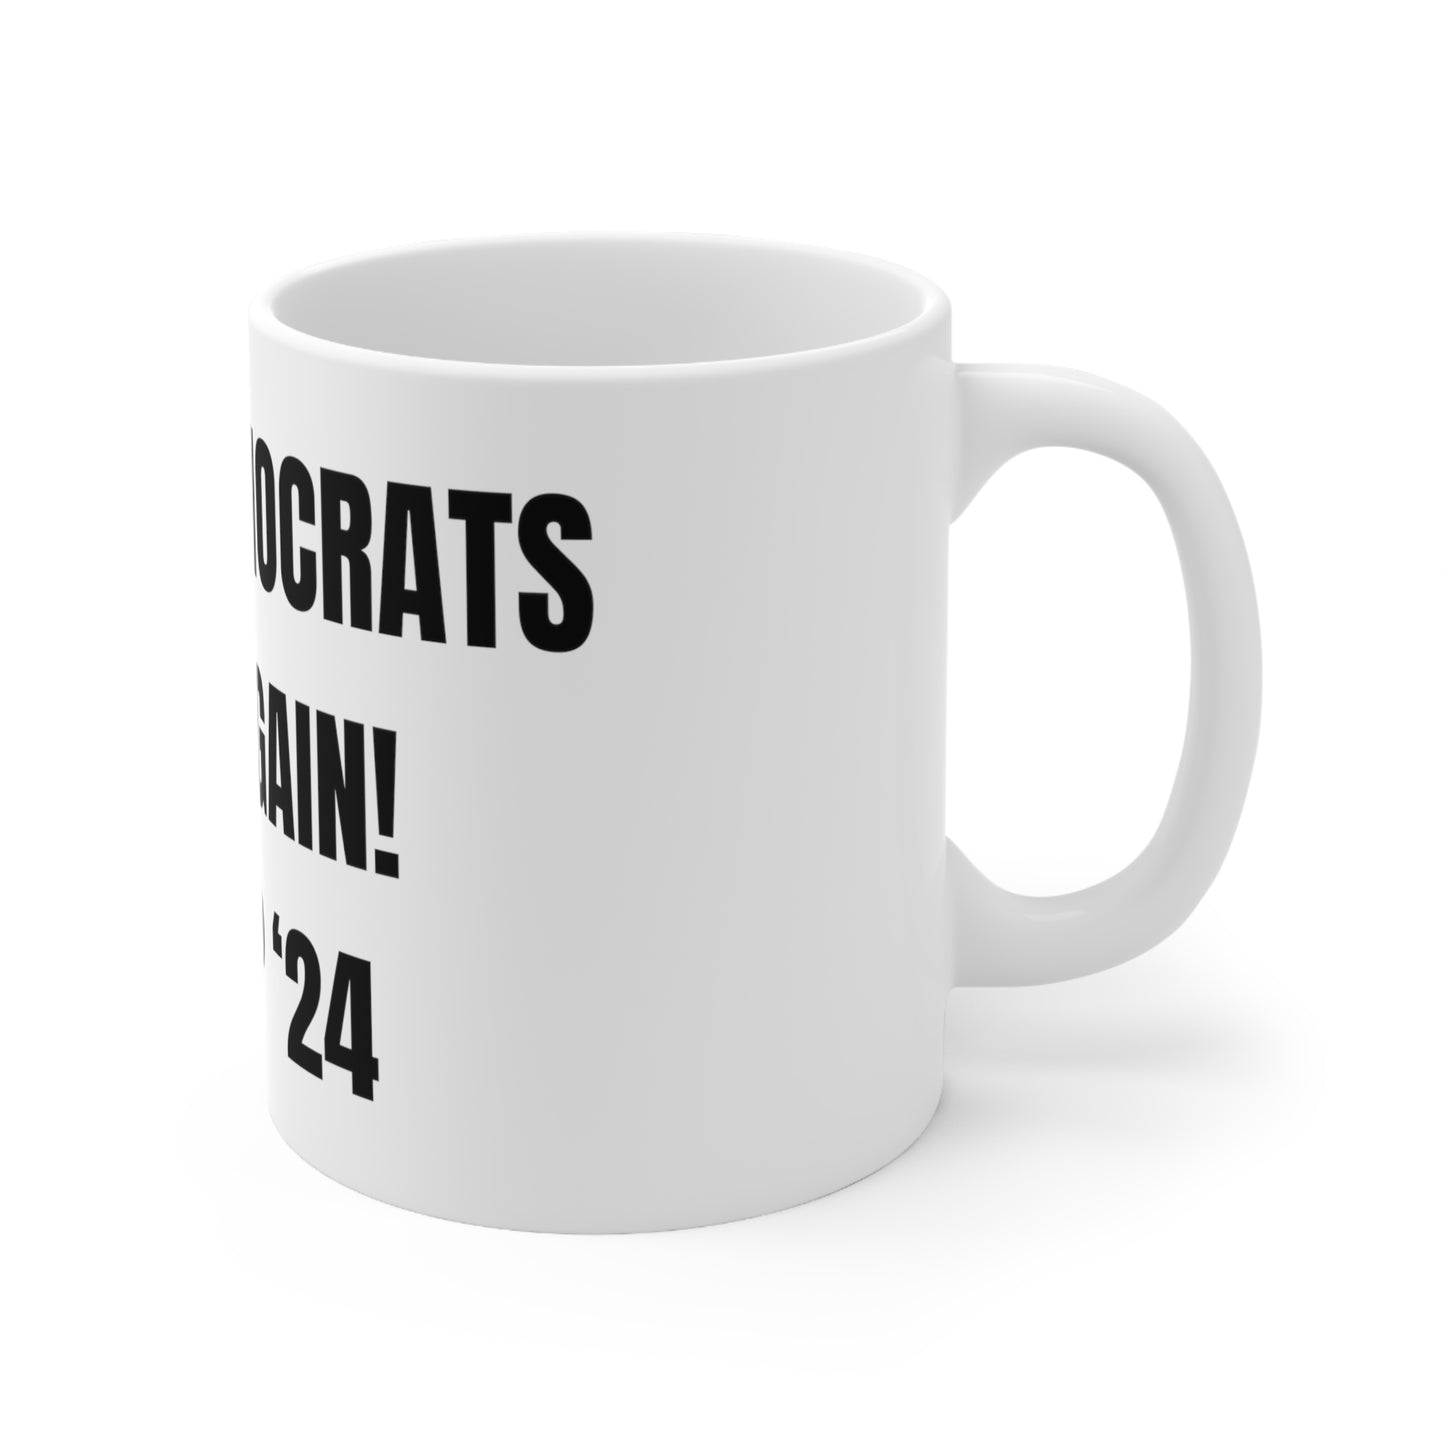 “MAKE DEMOCRATS FAFO AGAIN! TRUMP ‘24” Ceramic Mug 11oz